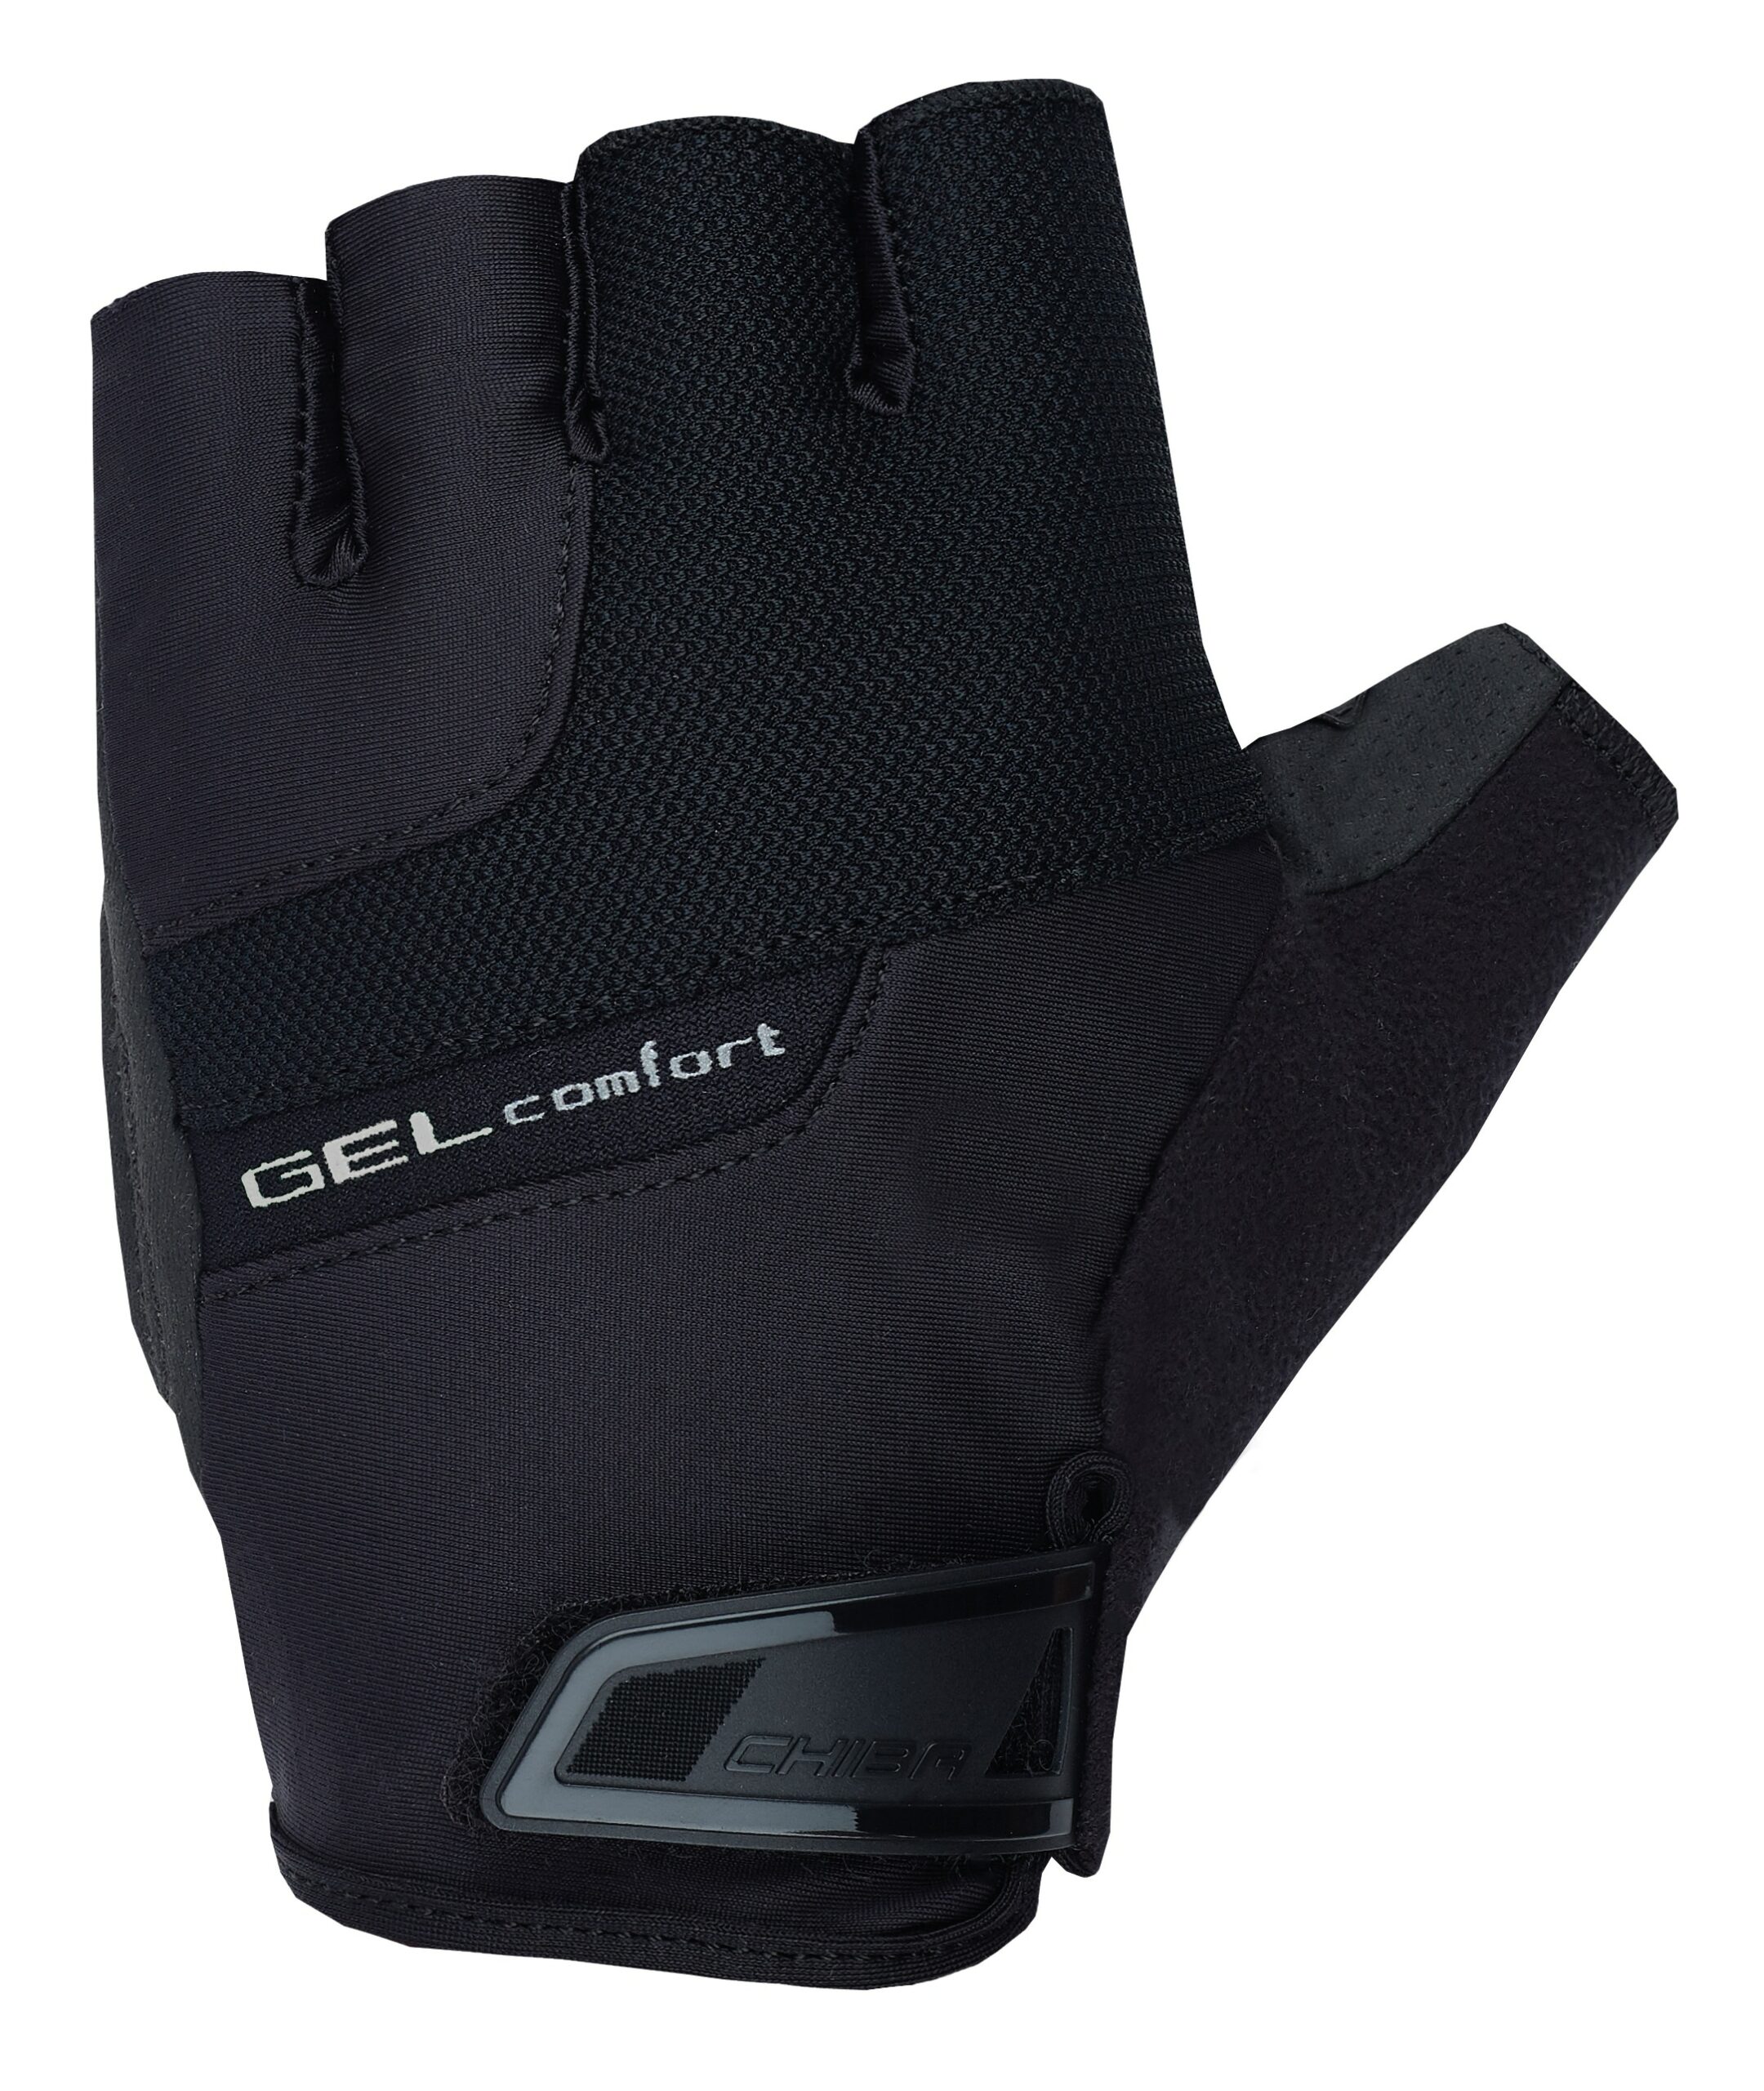 Chiba Gloves Gel Comfort Black